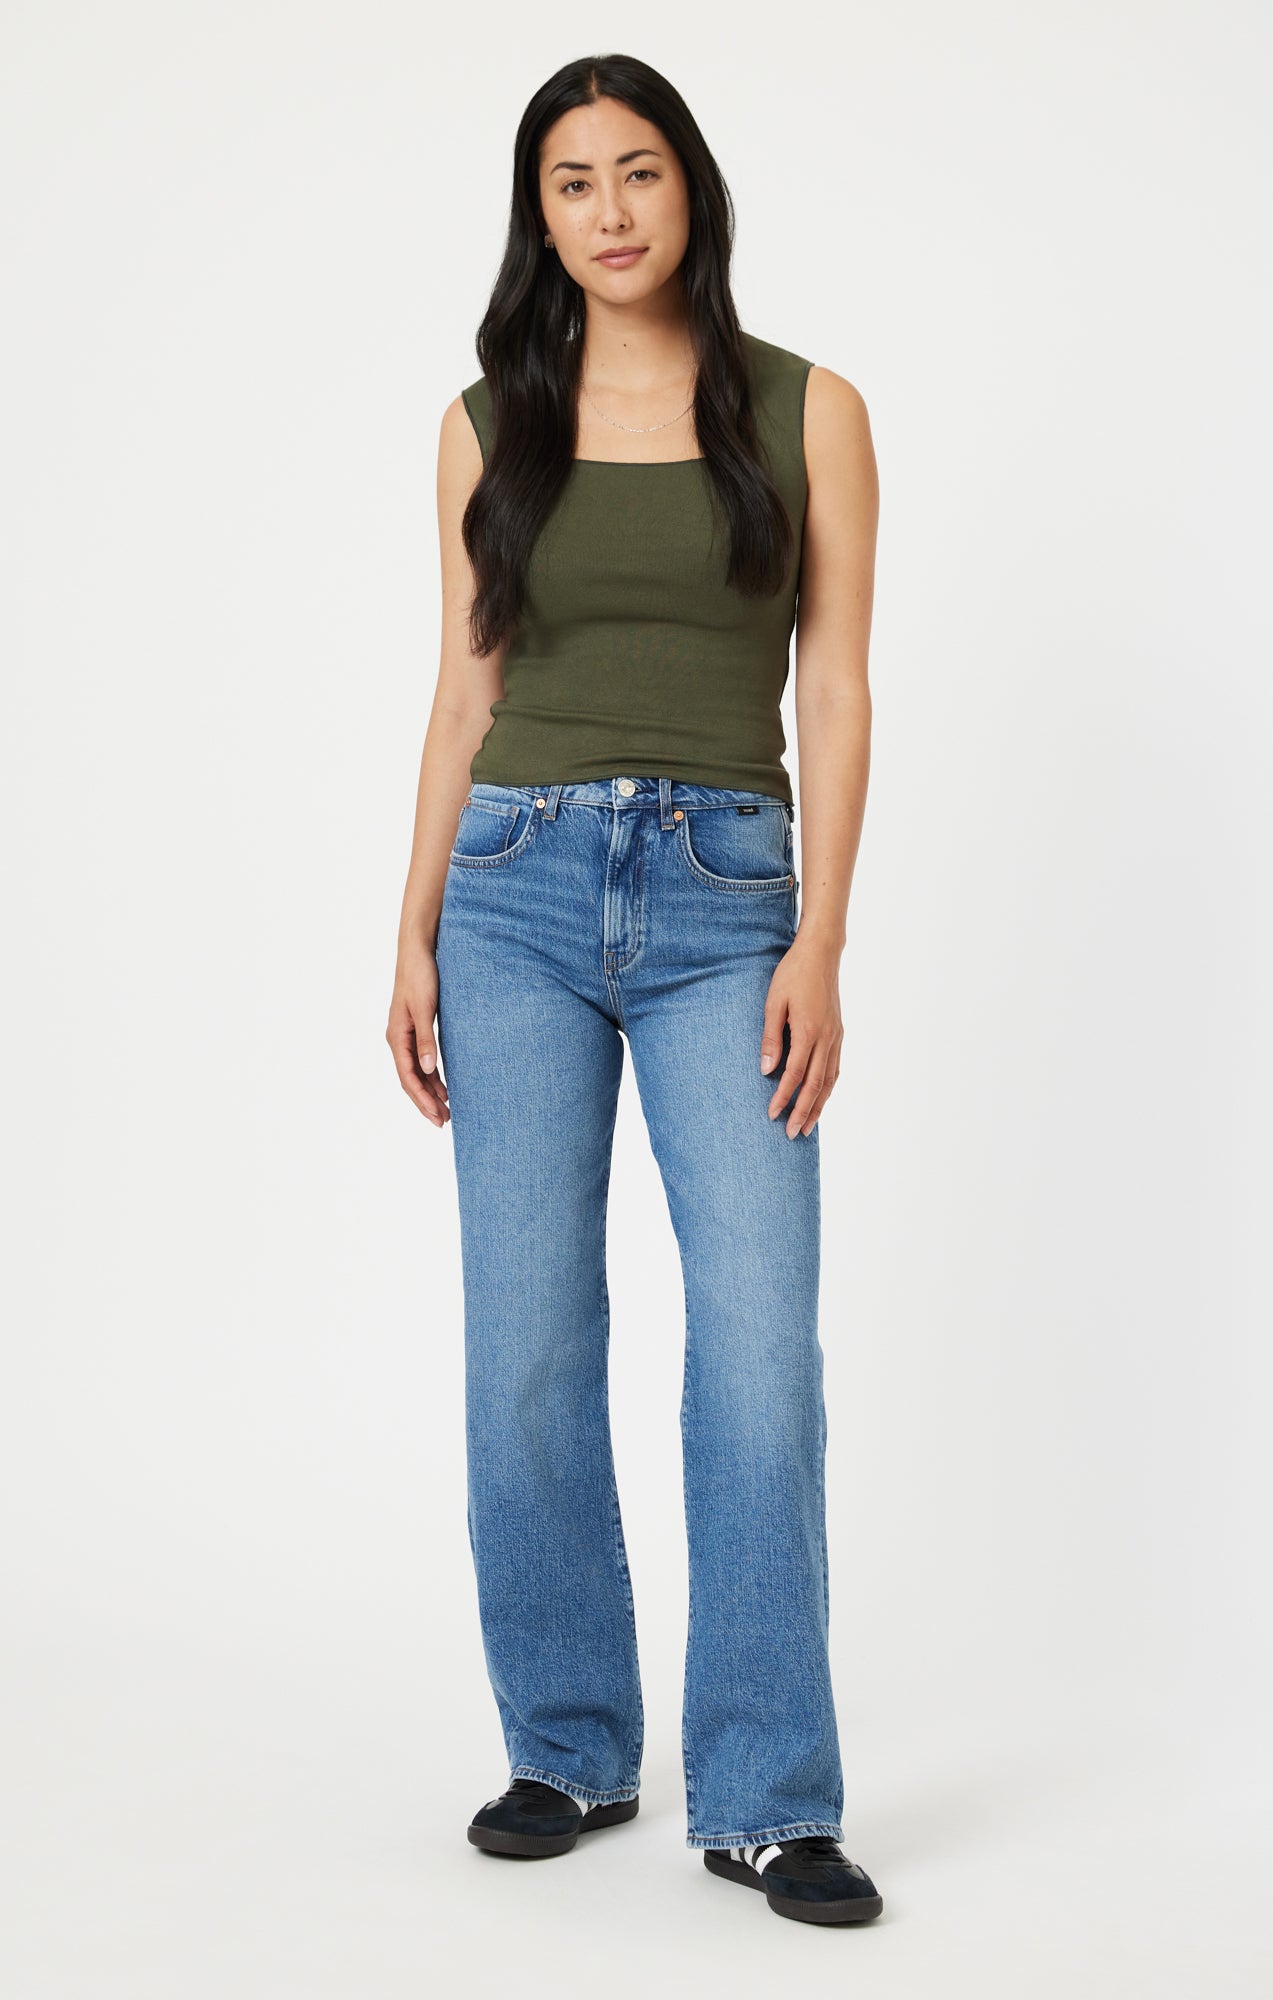 Shop Women's Denim Ultra High-Rise at Hudson Jeans